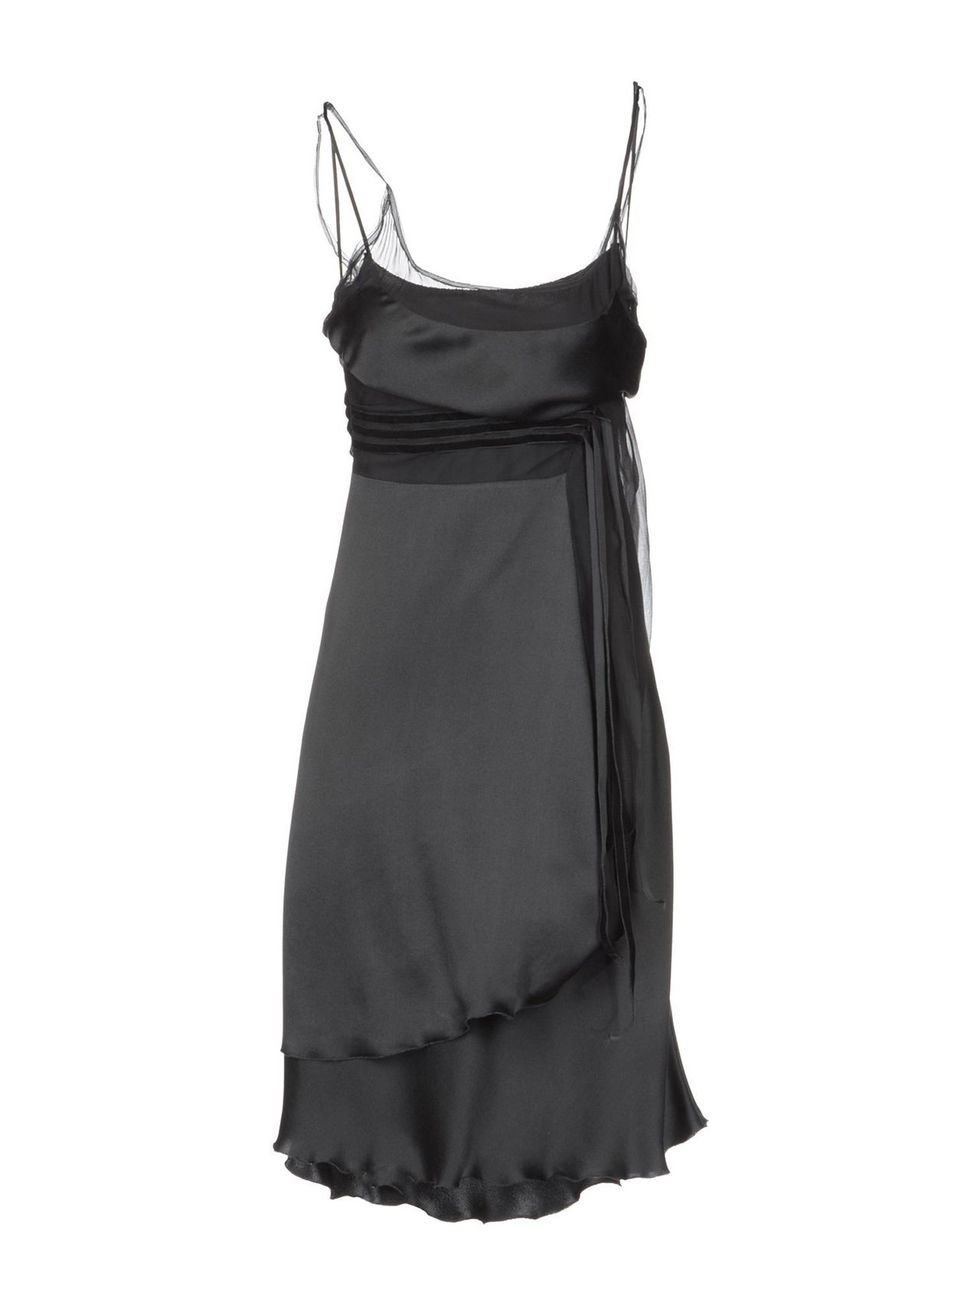 Dress, White, One-piece garment, Style, Day dress, Black, Grey, Black-and-white, Fashion design, Cocktail dress, 